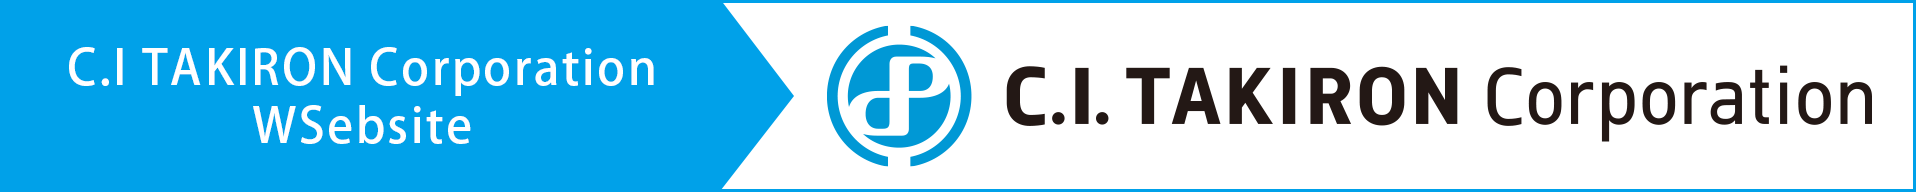 C.I. TAKIRON Corporation Website